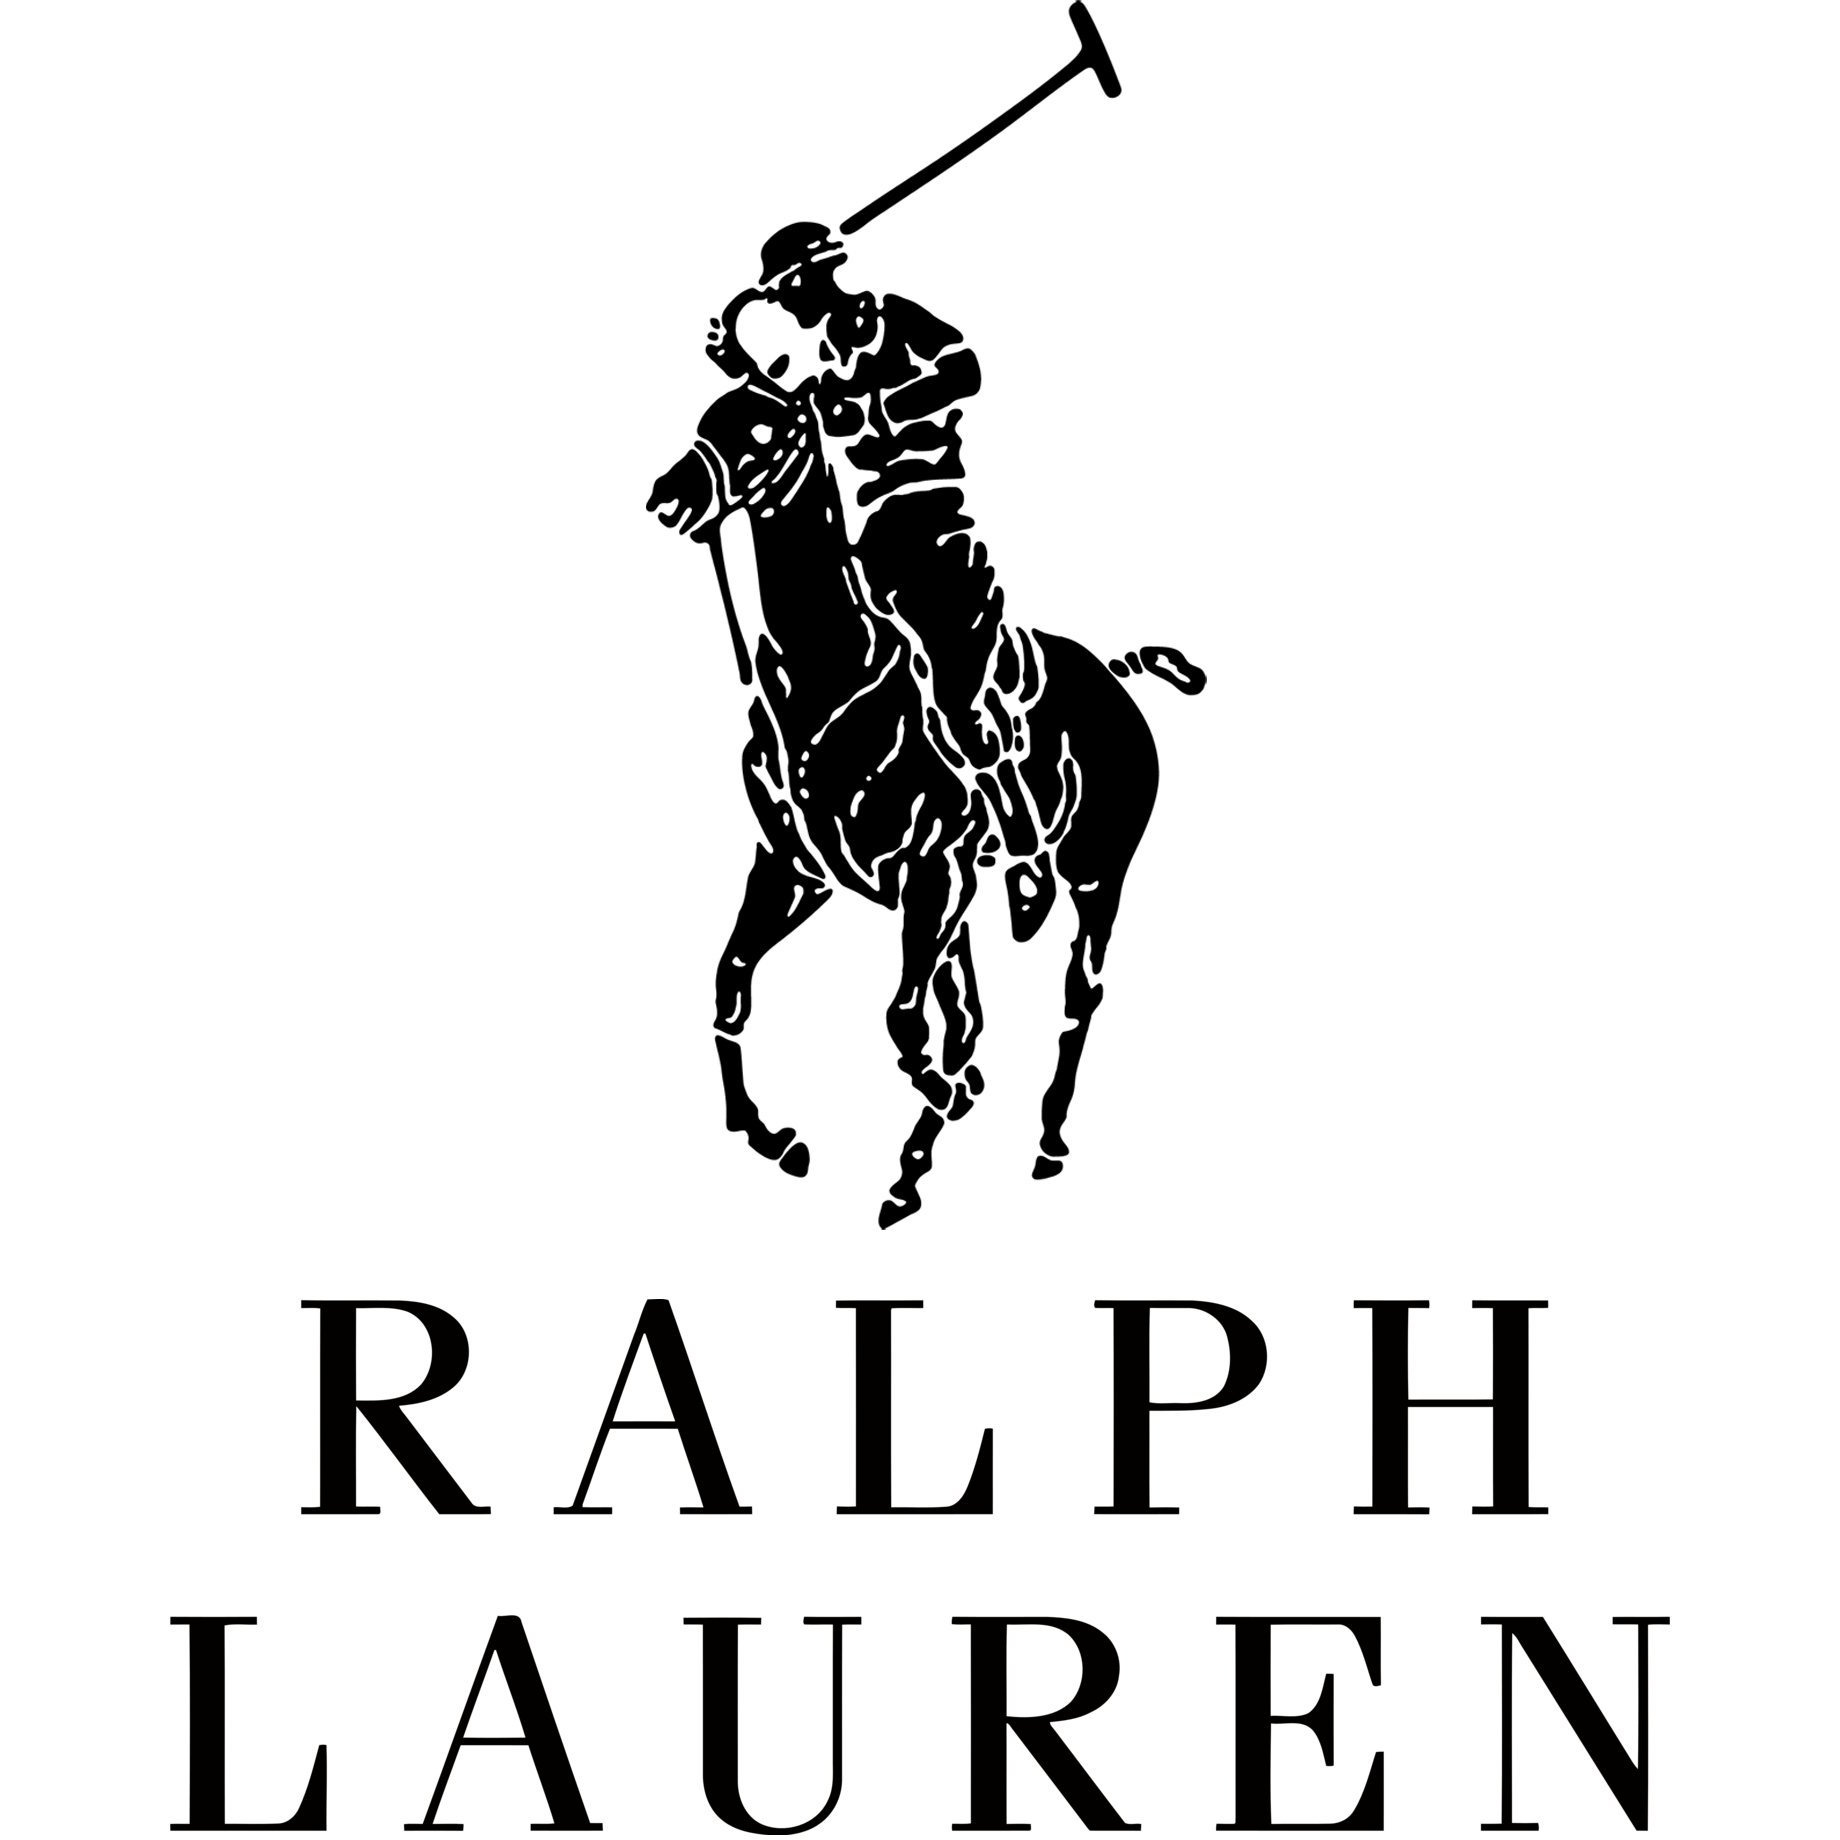 Ralph Lauren Blue Check Mens Shirt Full Sleeves - 15 1/2 X 32/33